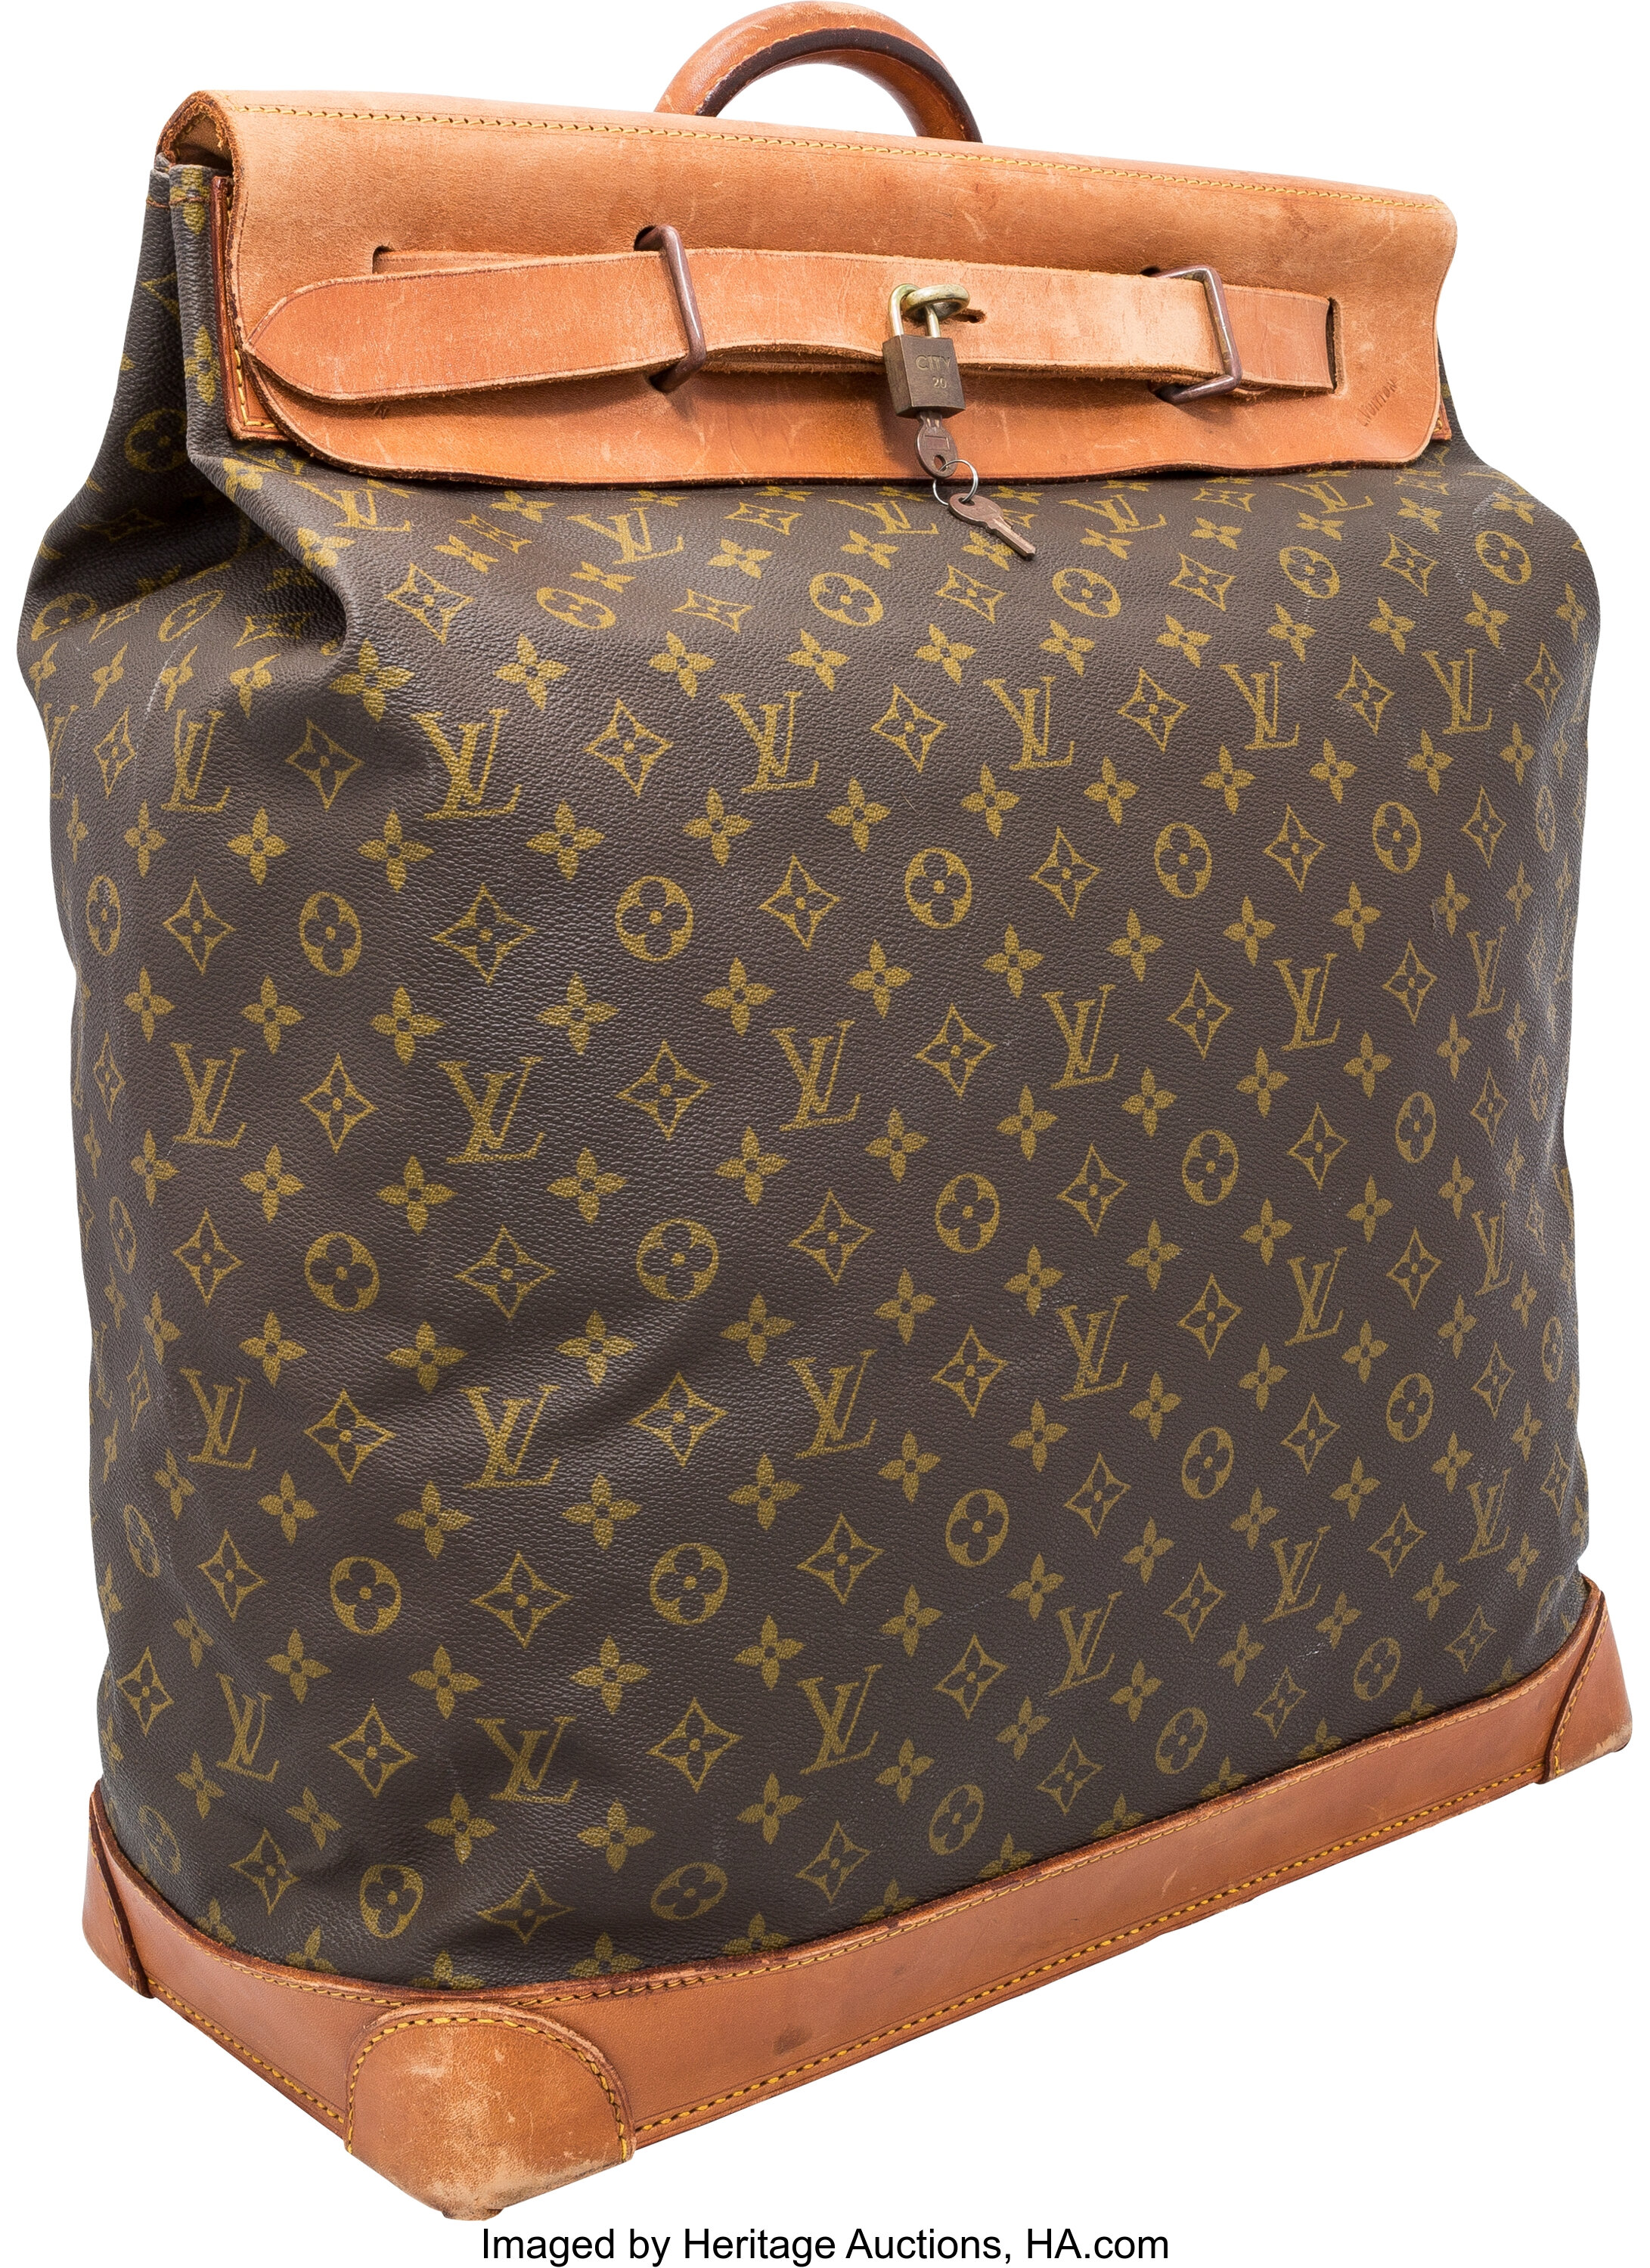 Lot 4 - A Louis Vuitton Steamer bag in monogrammed